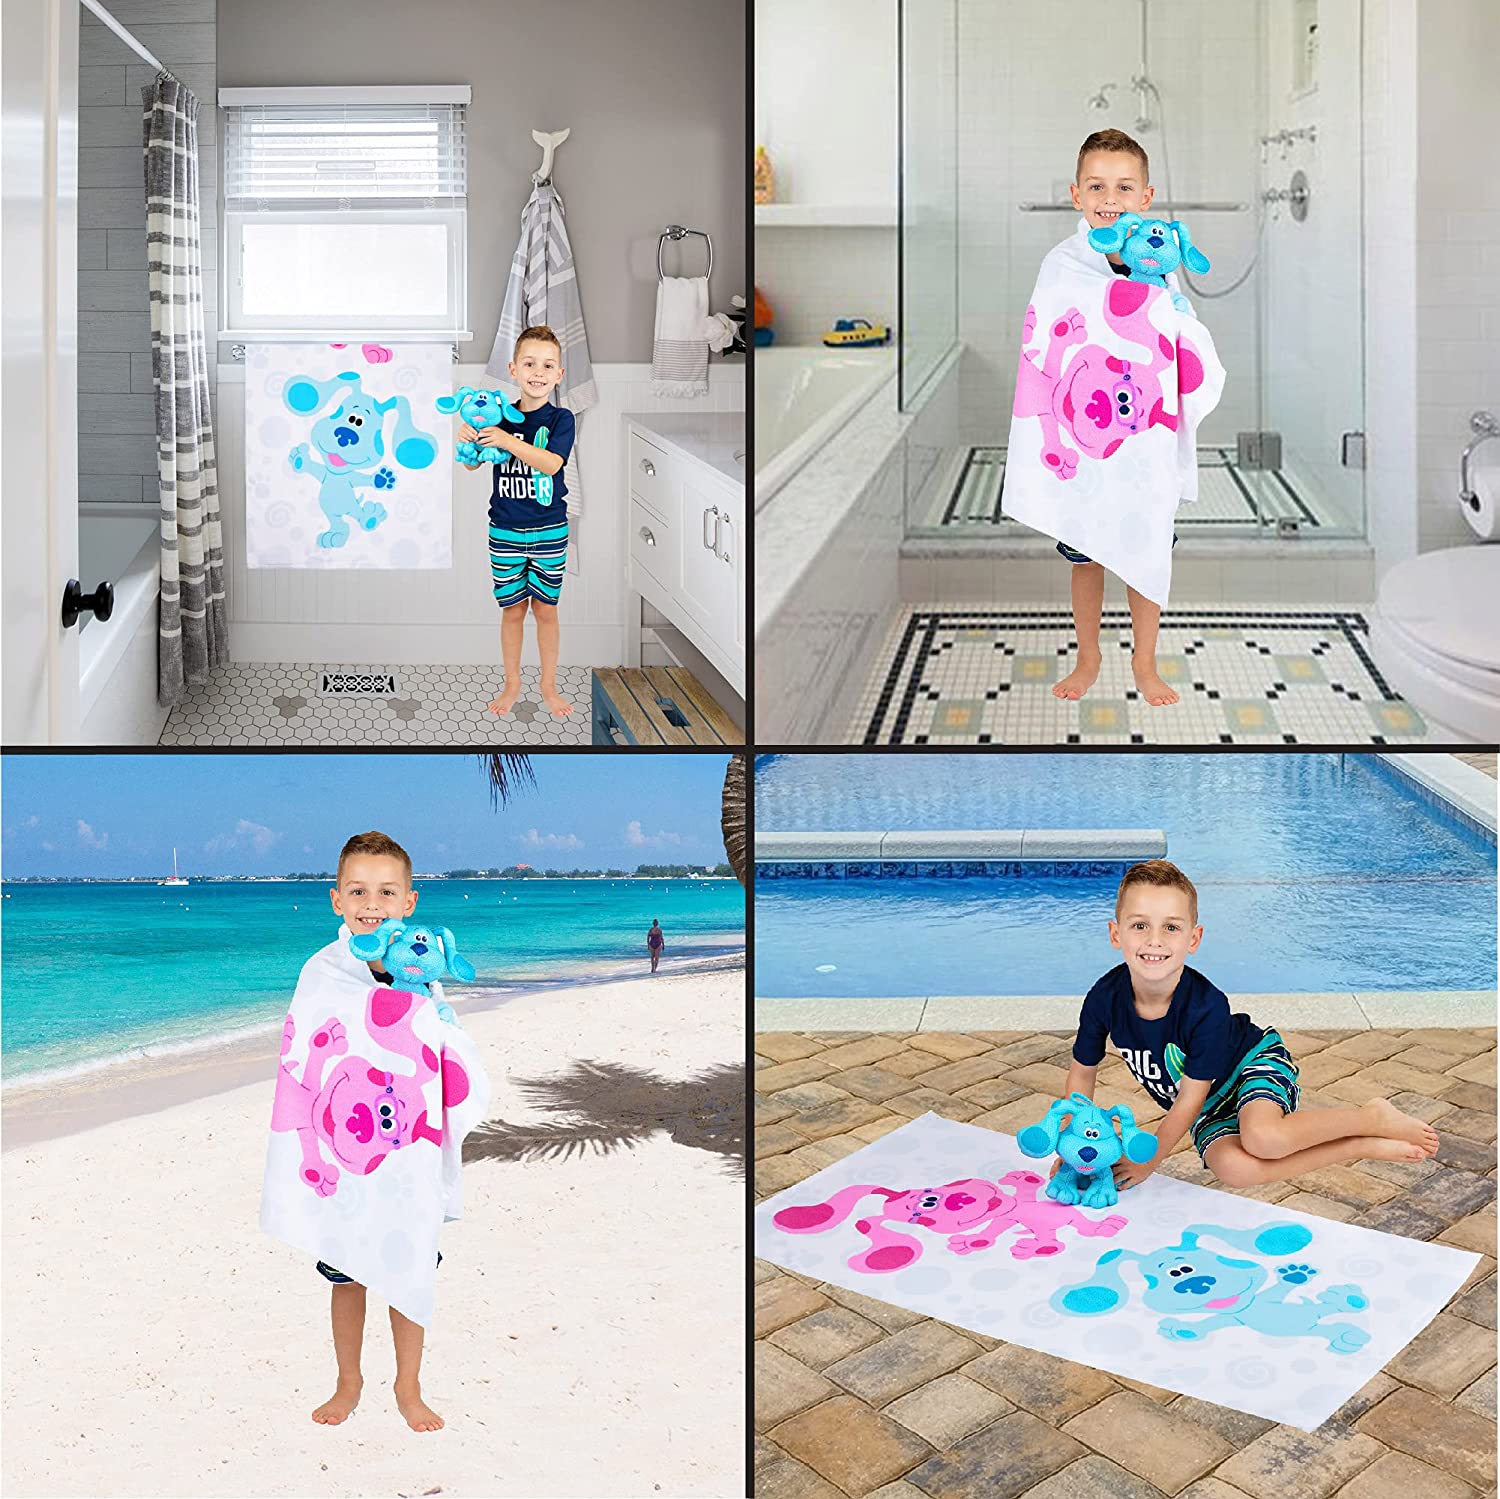 Franco Kids Bath and Beach Super Soft Mesh Scrubby and Microfiber Towel Set, 50 in x 25 in, Blues Clues